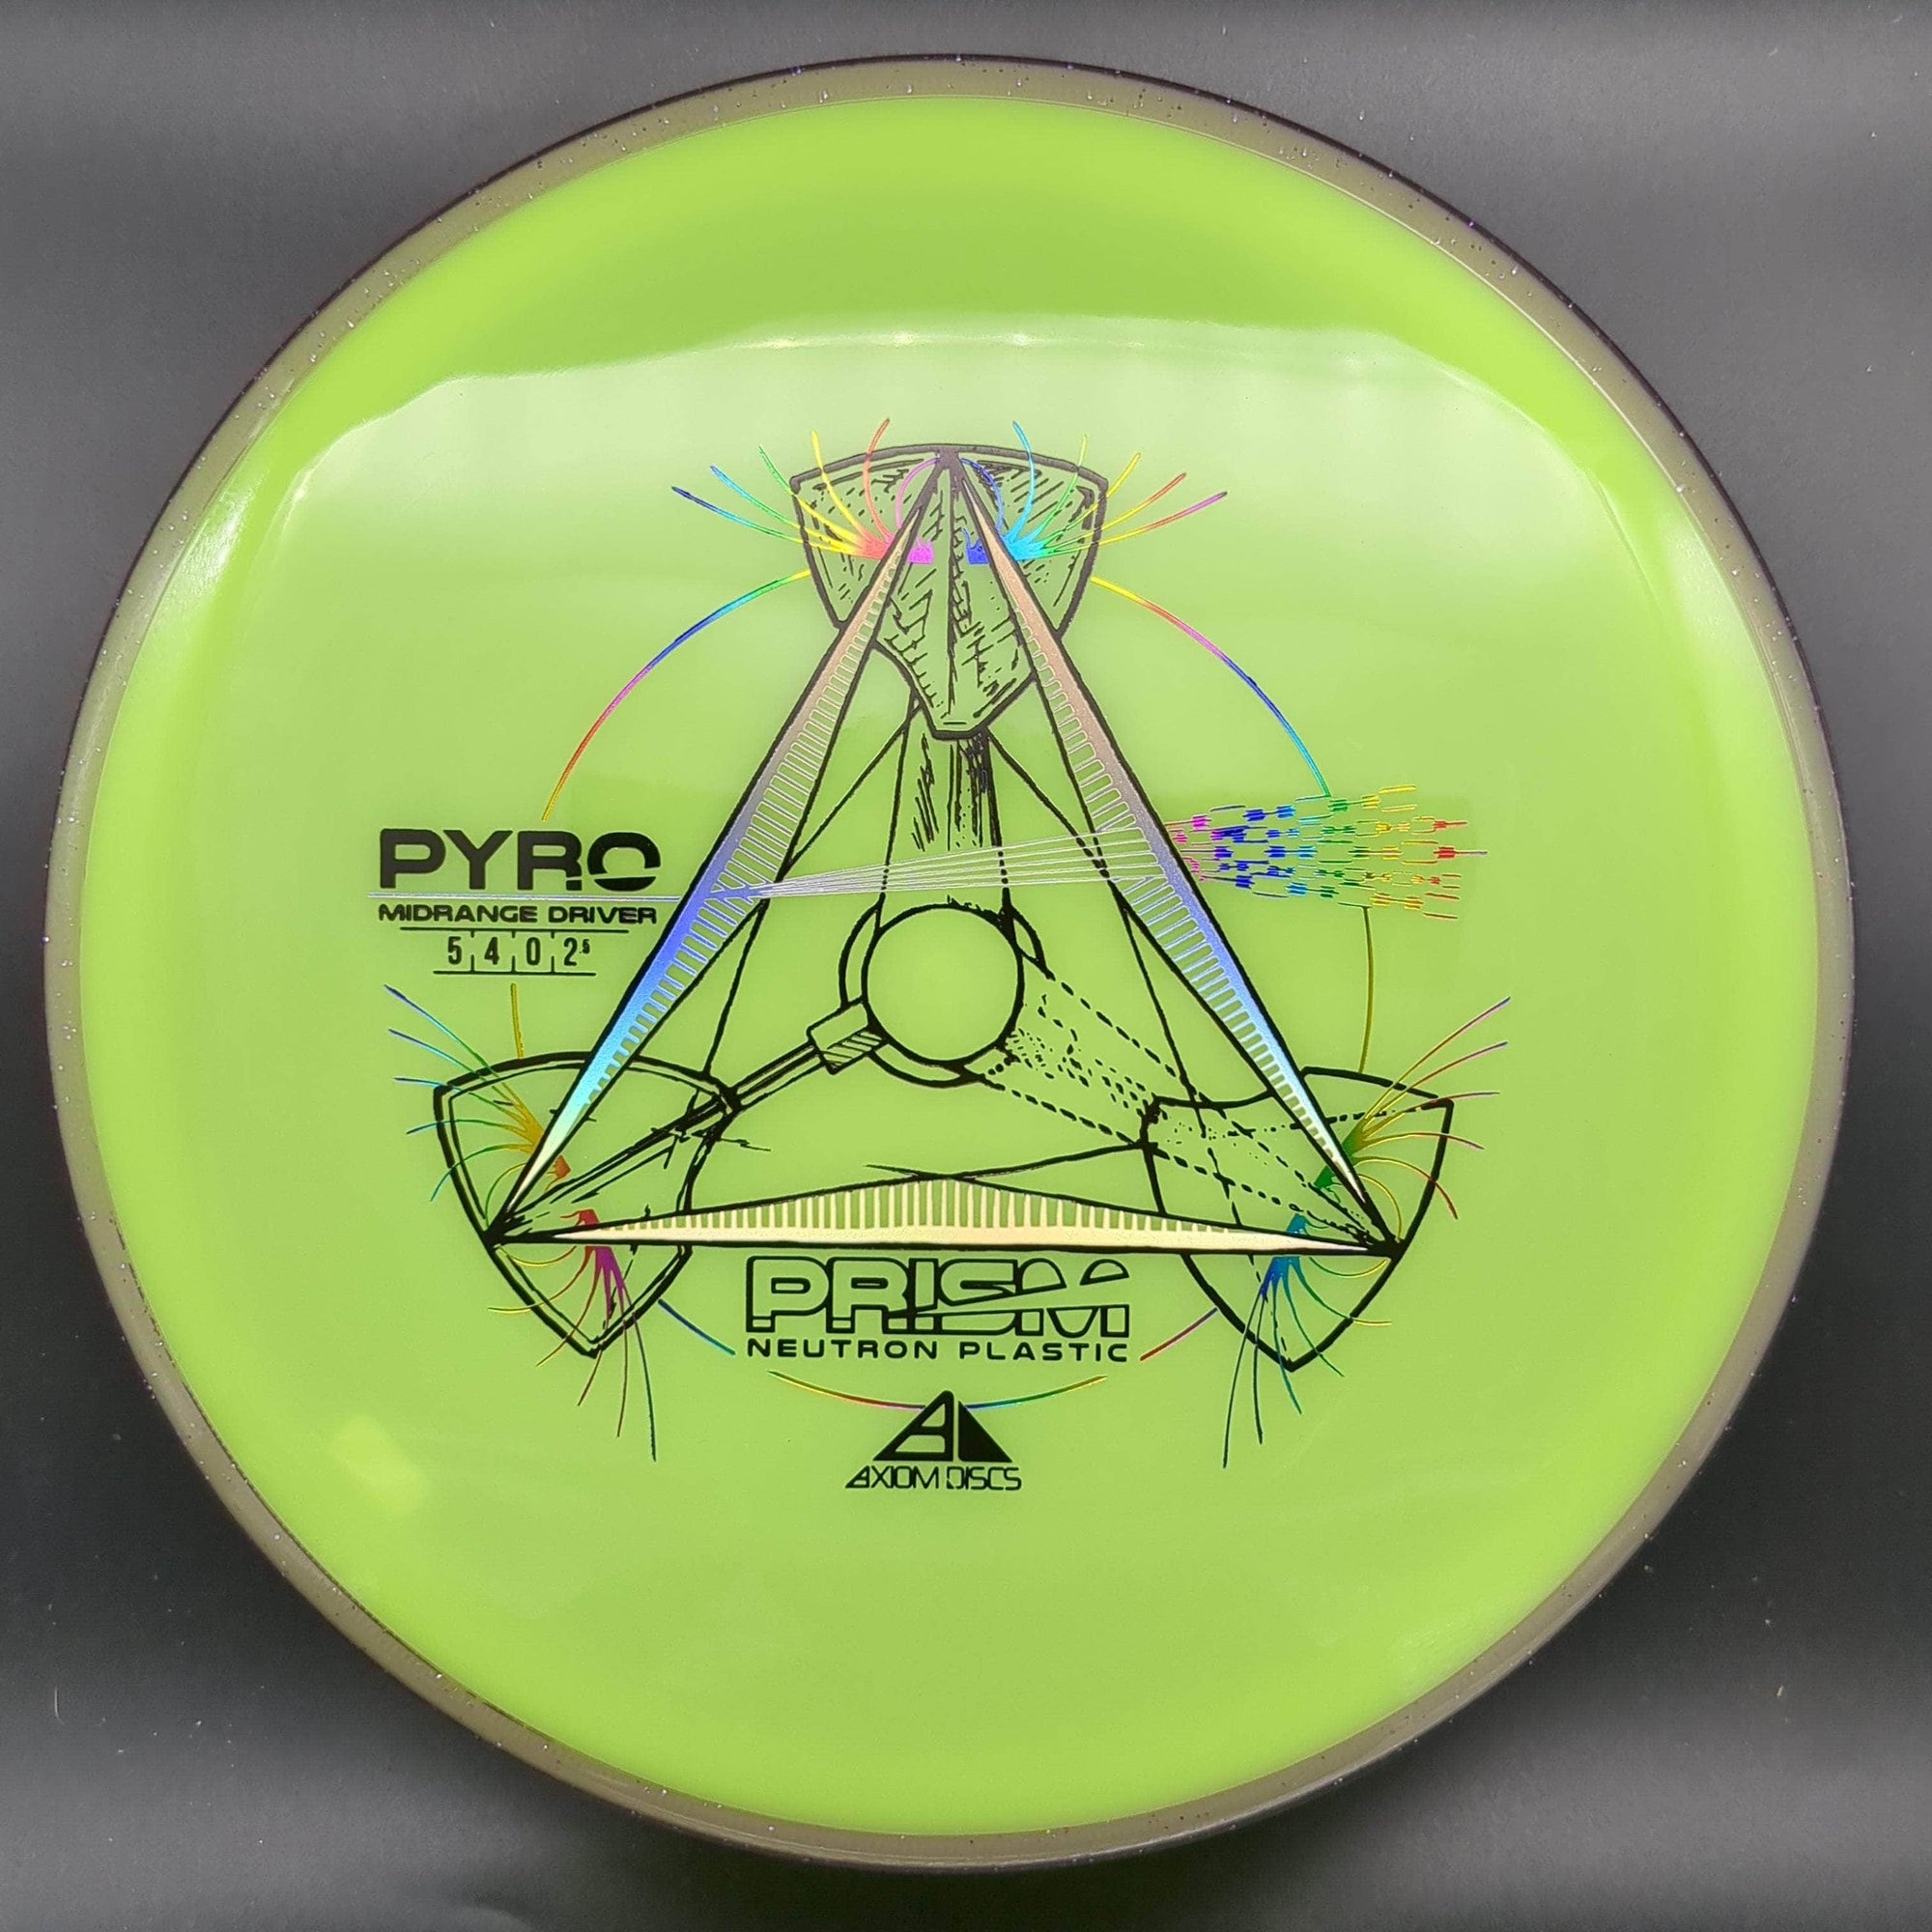 MVP Mid Range Light Purple Rim Yellow 178g Pyro, Prism Neutron